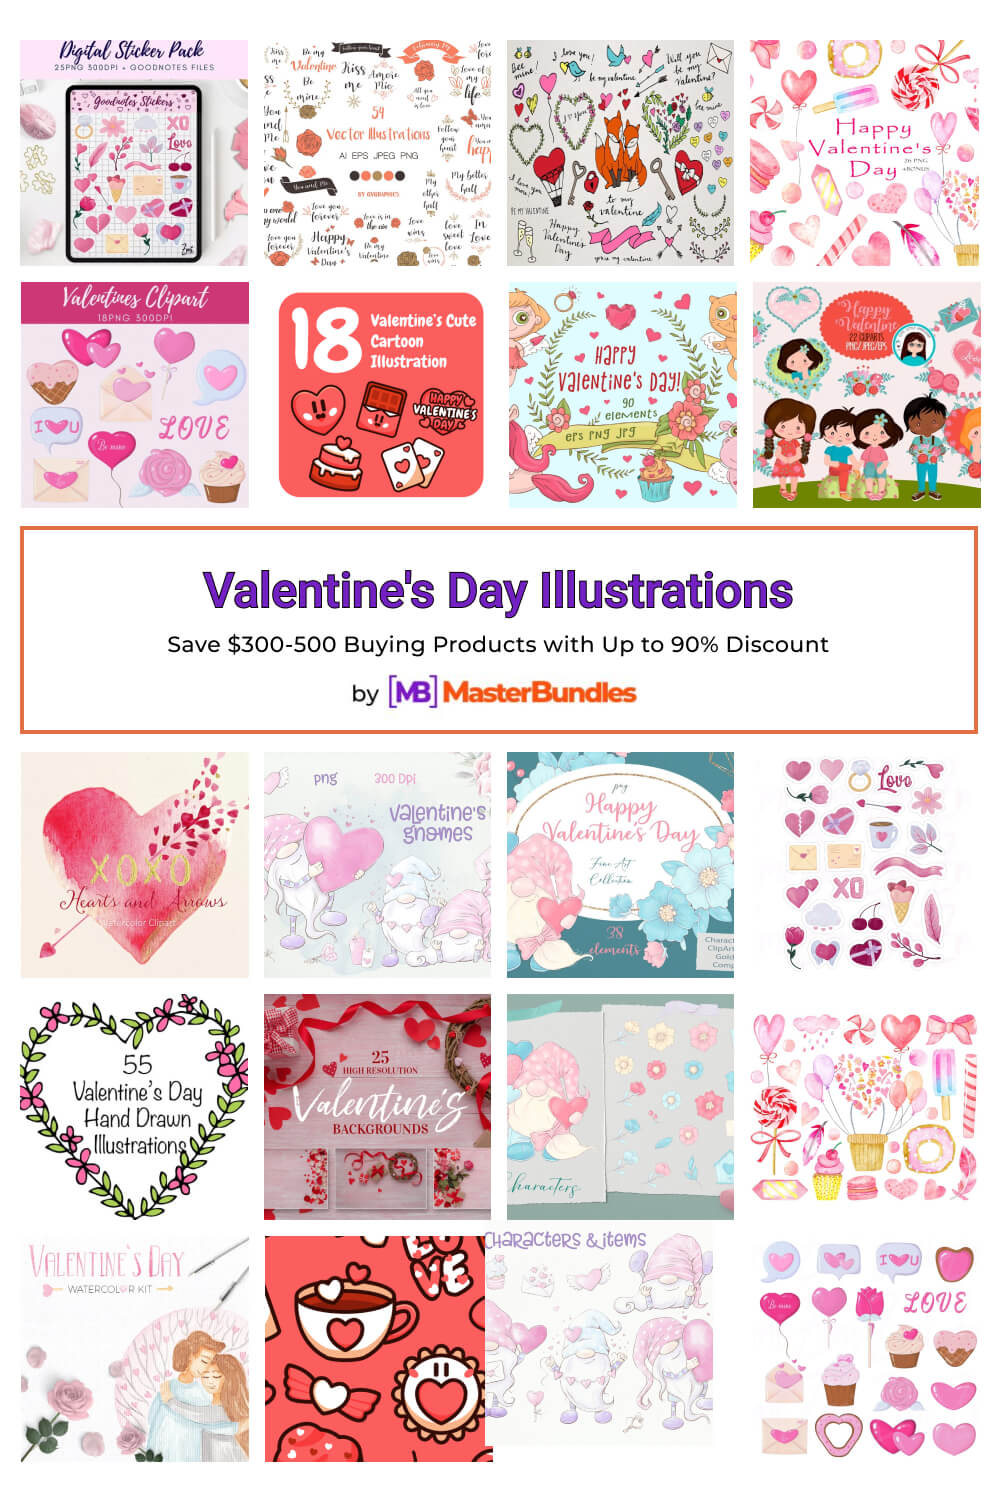 valentines day illustrations pinterest image.